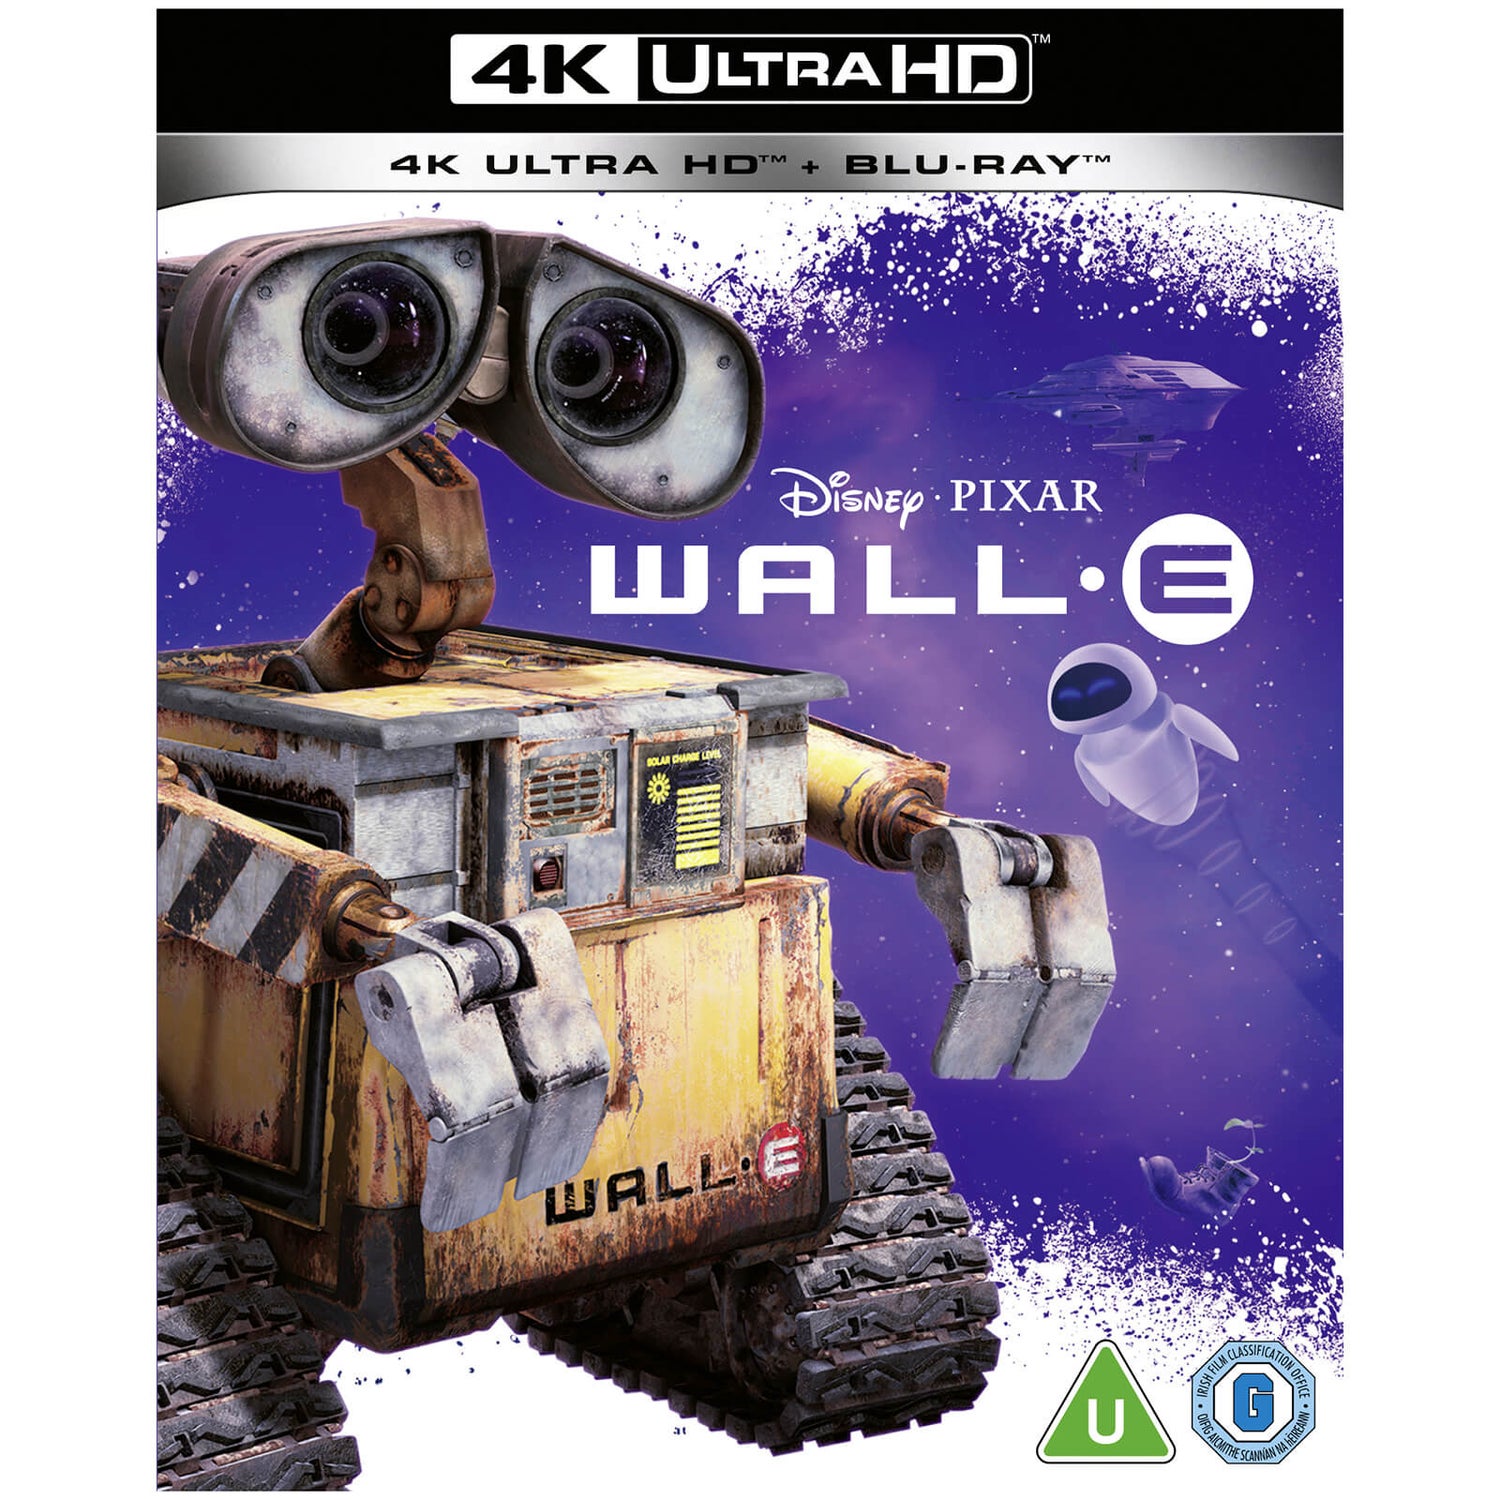 Wall-E - Zavvi Exclusive 4K Ultra HD Collection #7